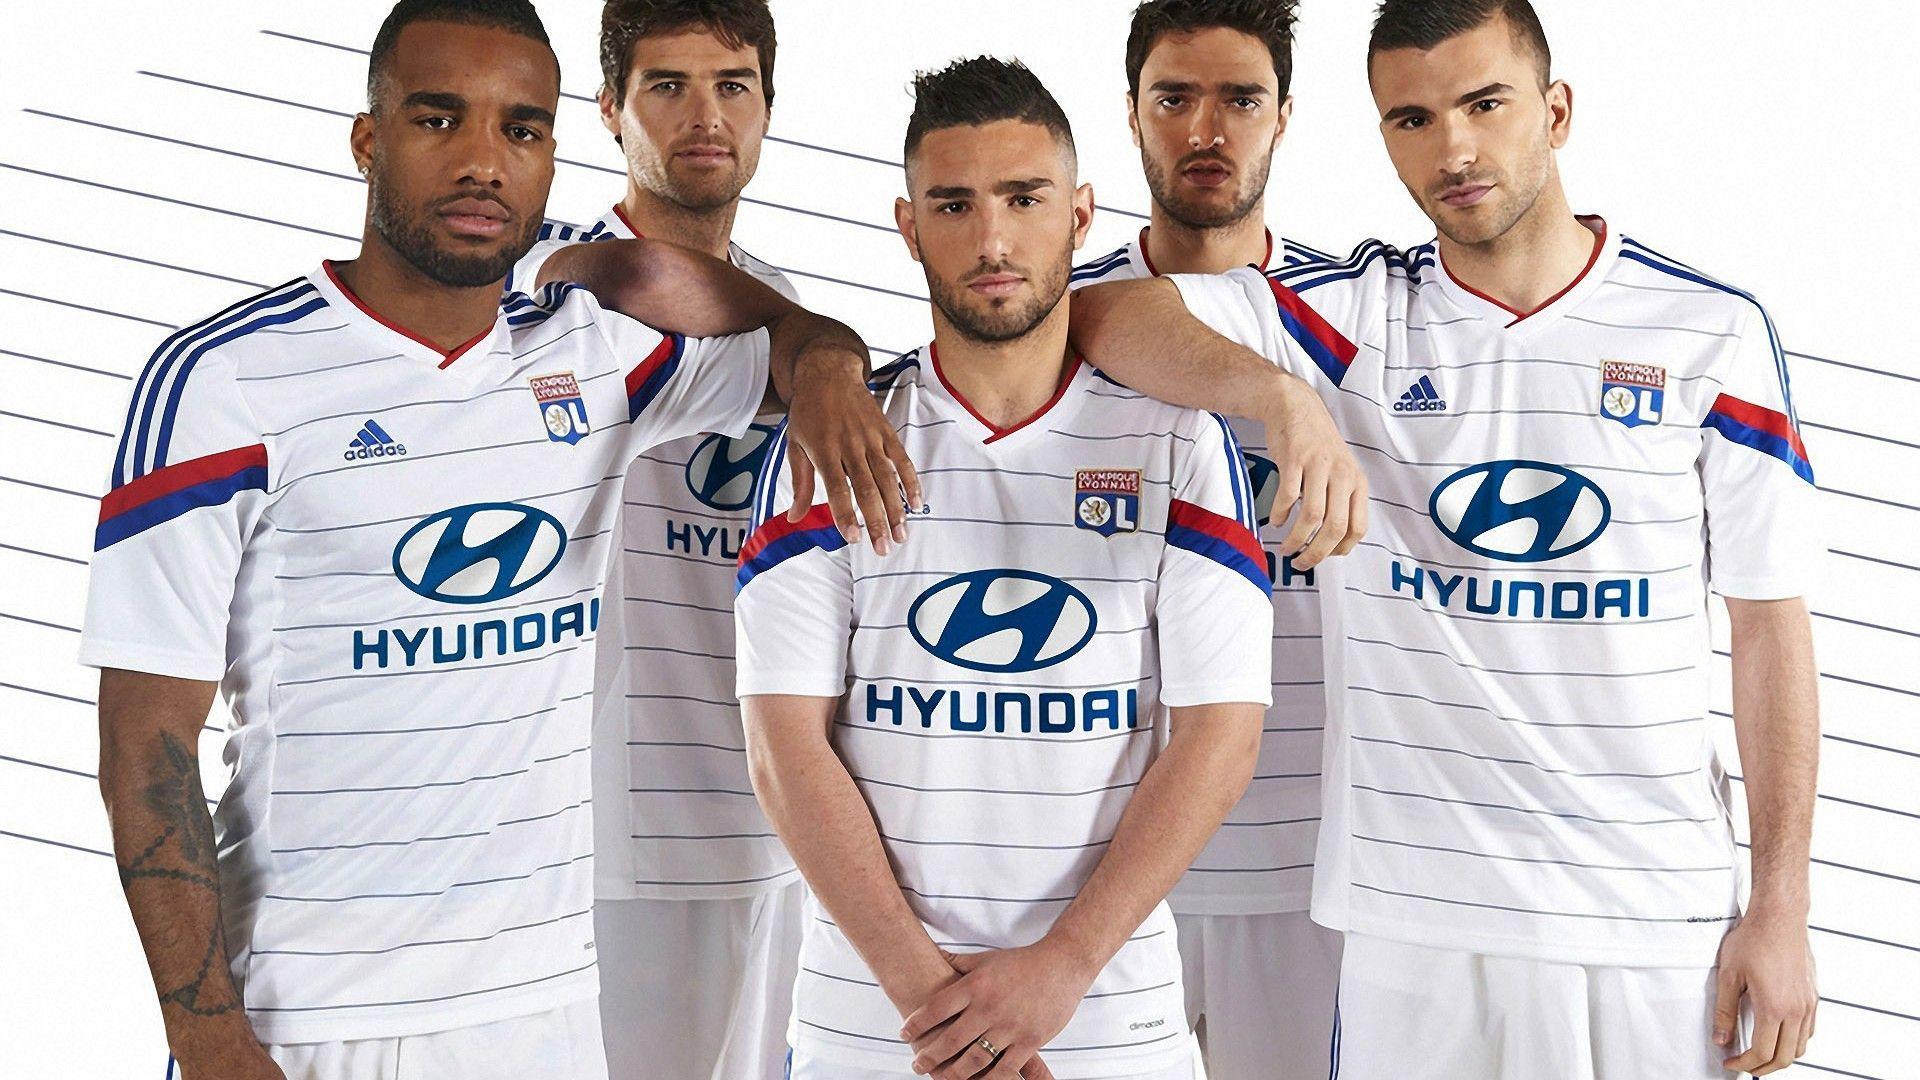 Olympique Lyonnais Jersey 2014 2015 Adidas Home Kit Wallpaper Wide